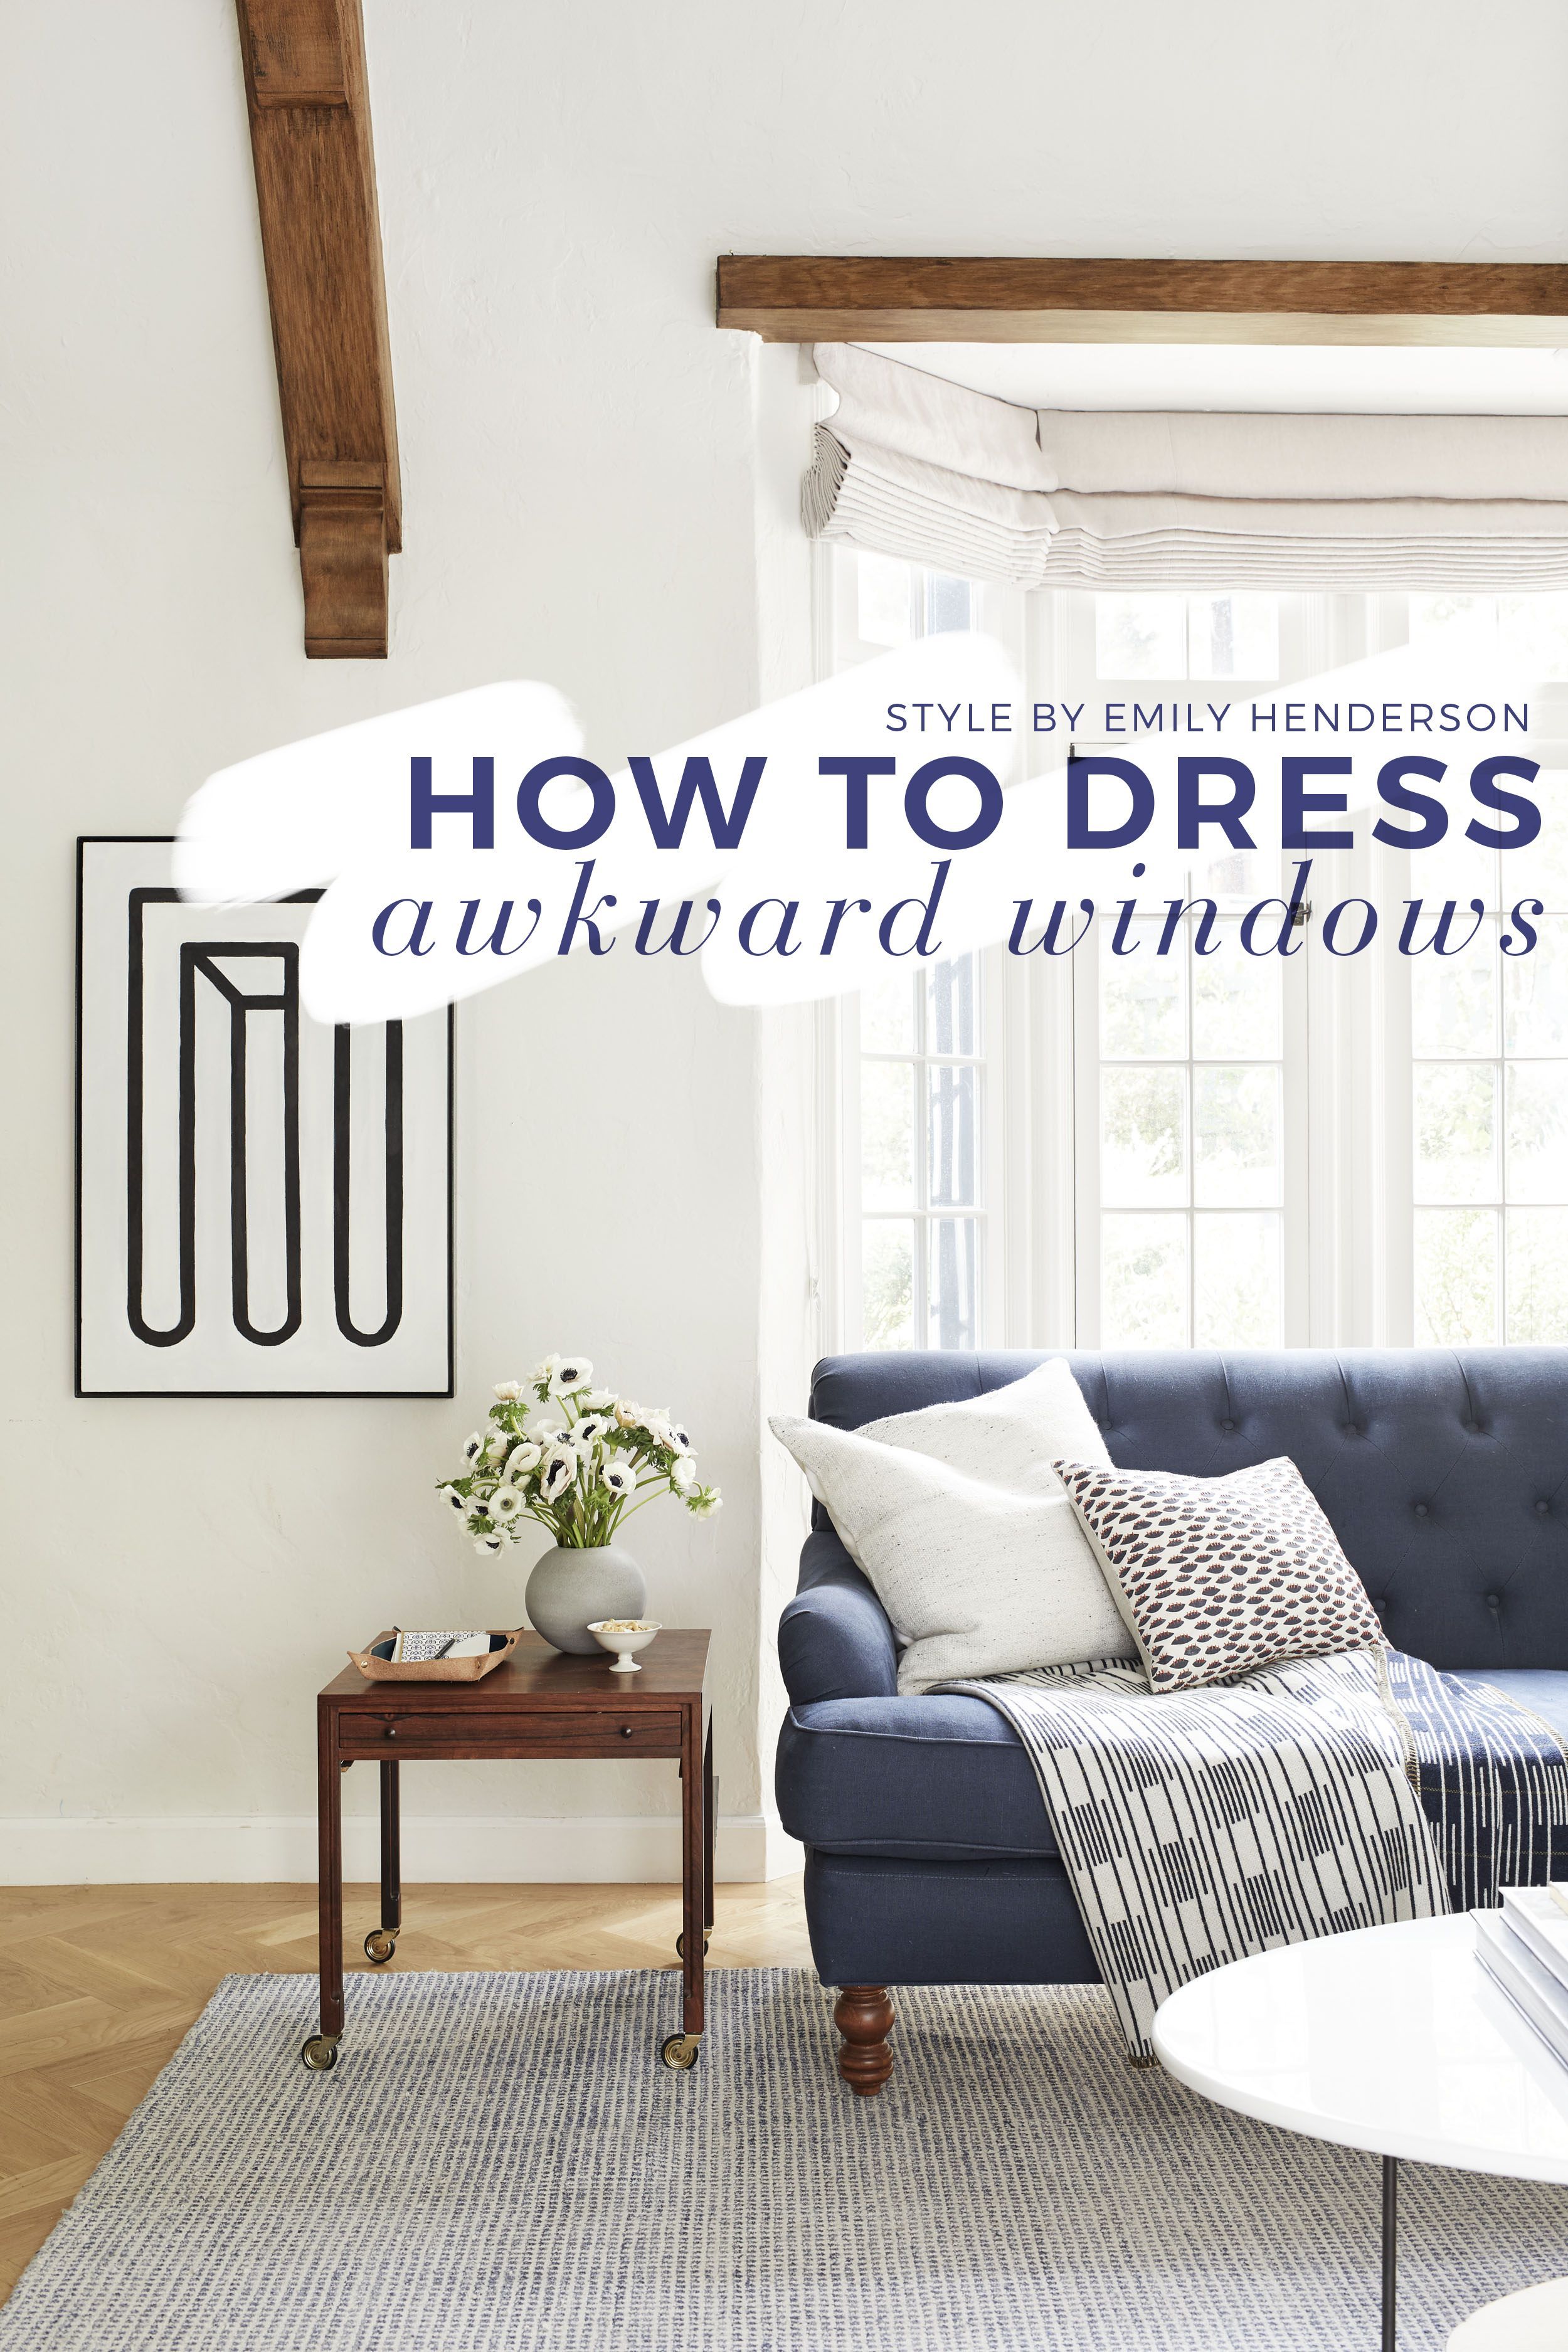 How To Dress Awkward Windows + Where To Shop For Readymade Options -   12 dress Room house ideas